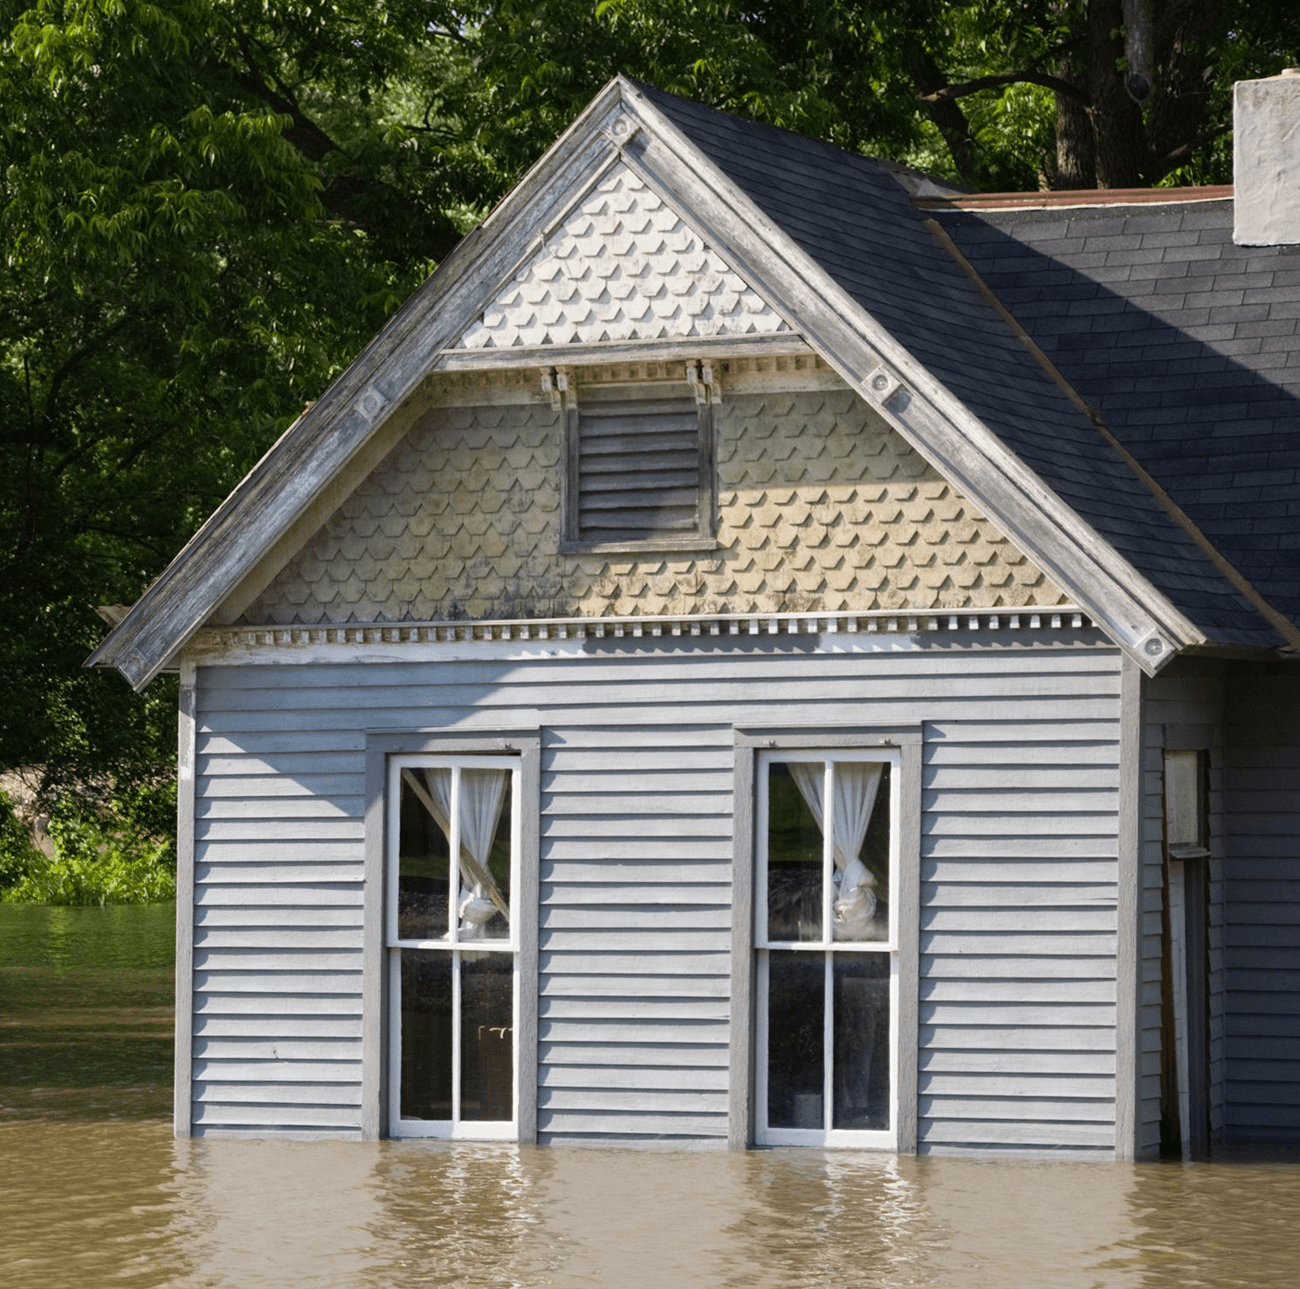 house with flood damage